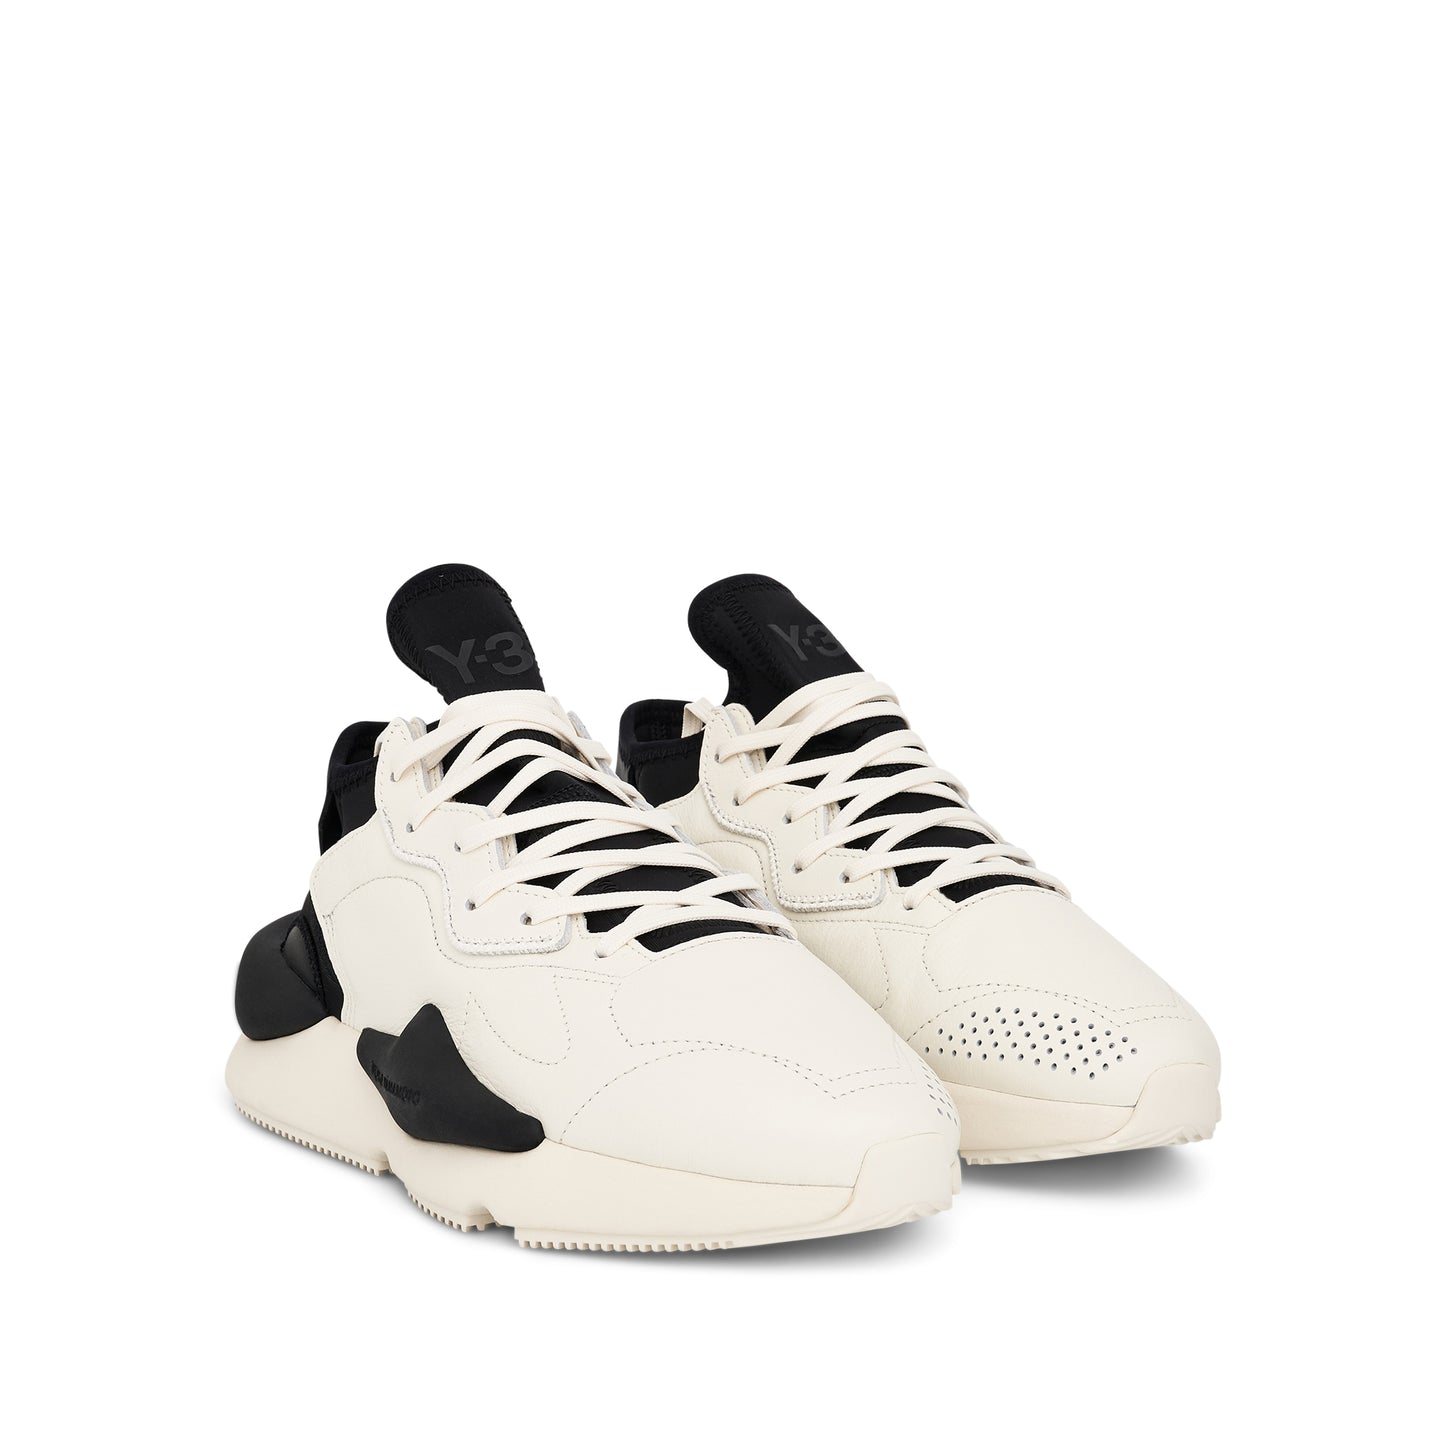 Kaiwa Sneaker in White/Black